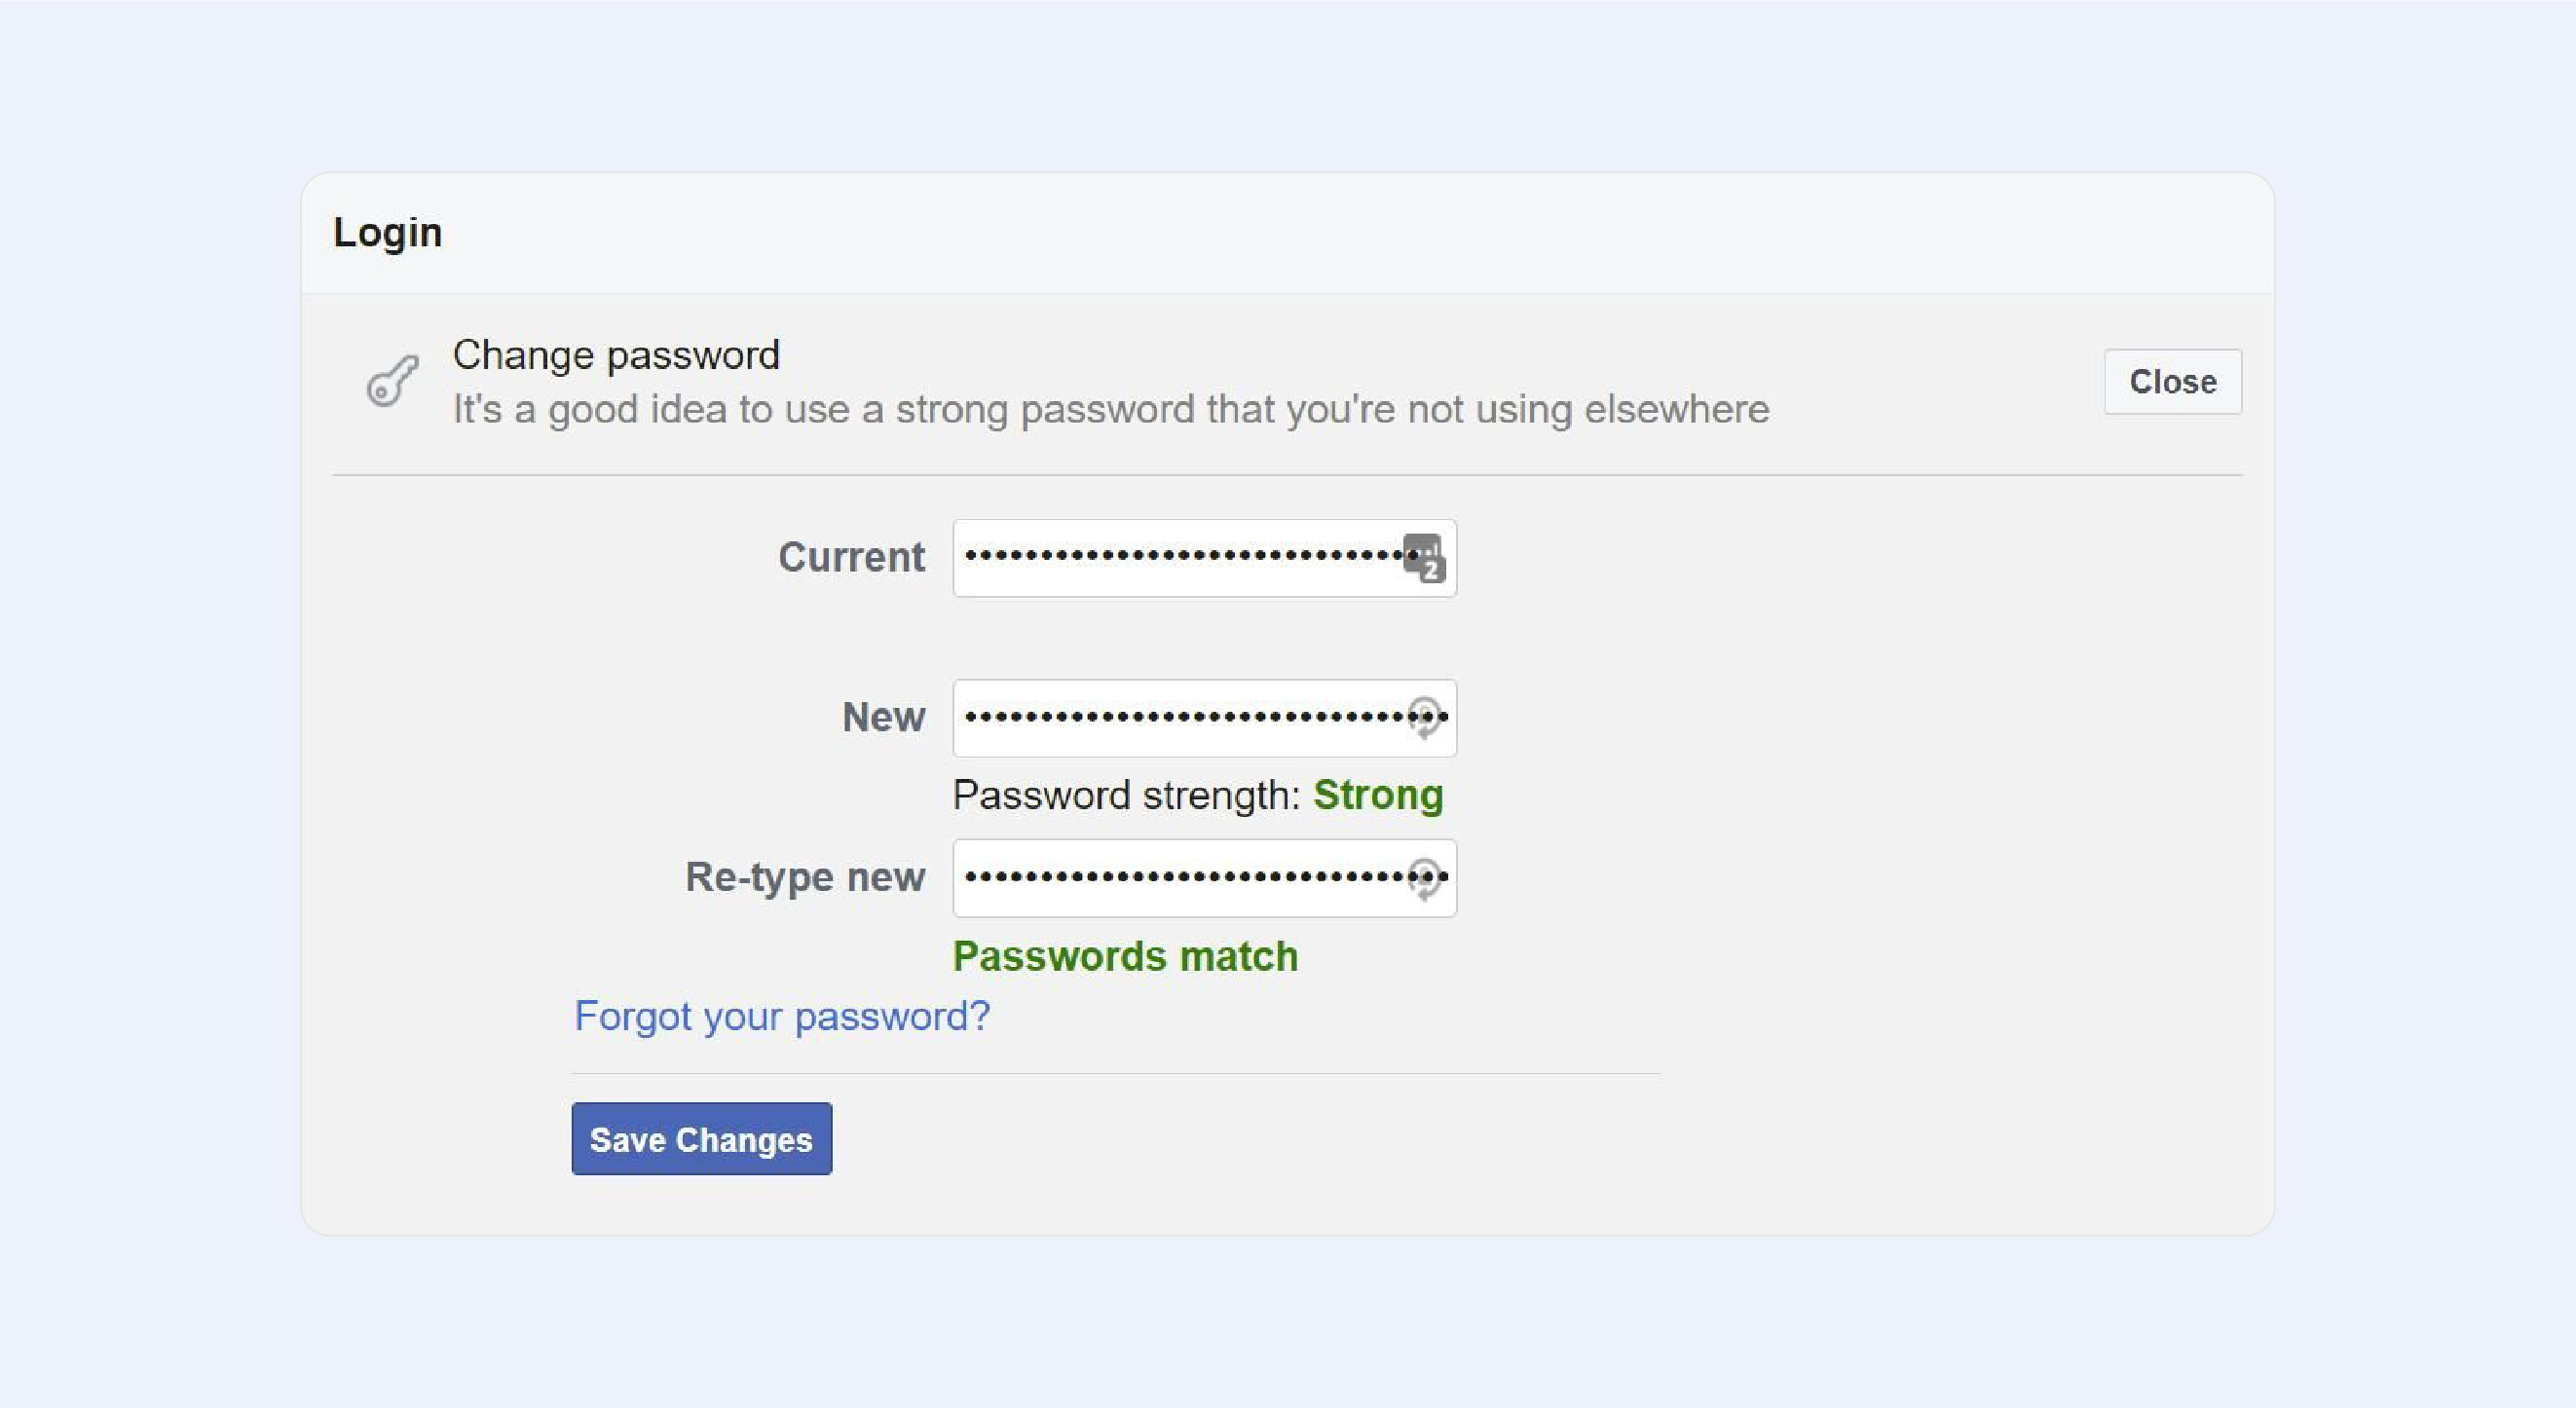 Facebook Login Account Password at www.facebook.com